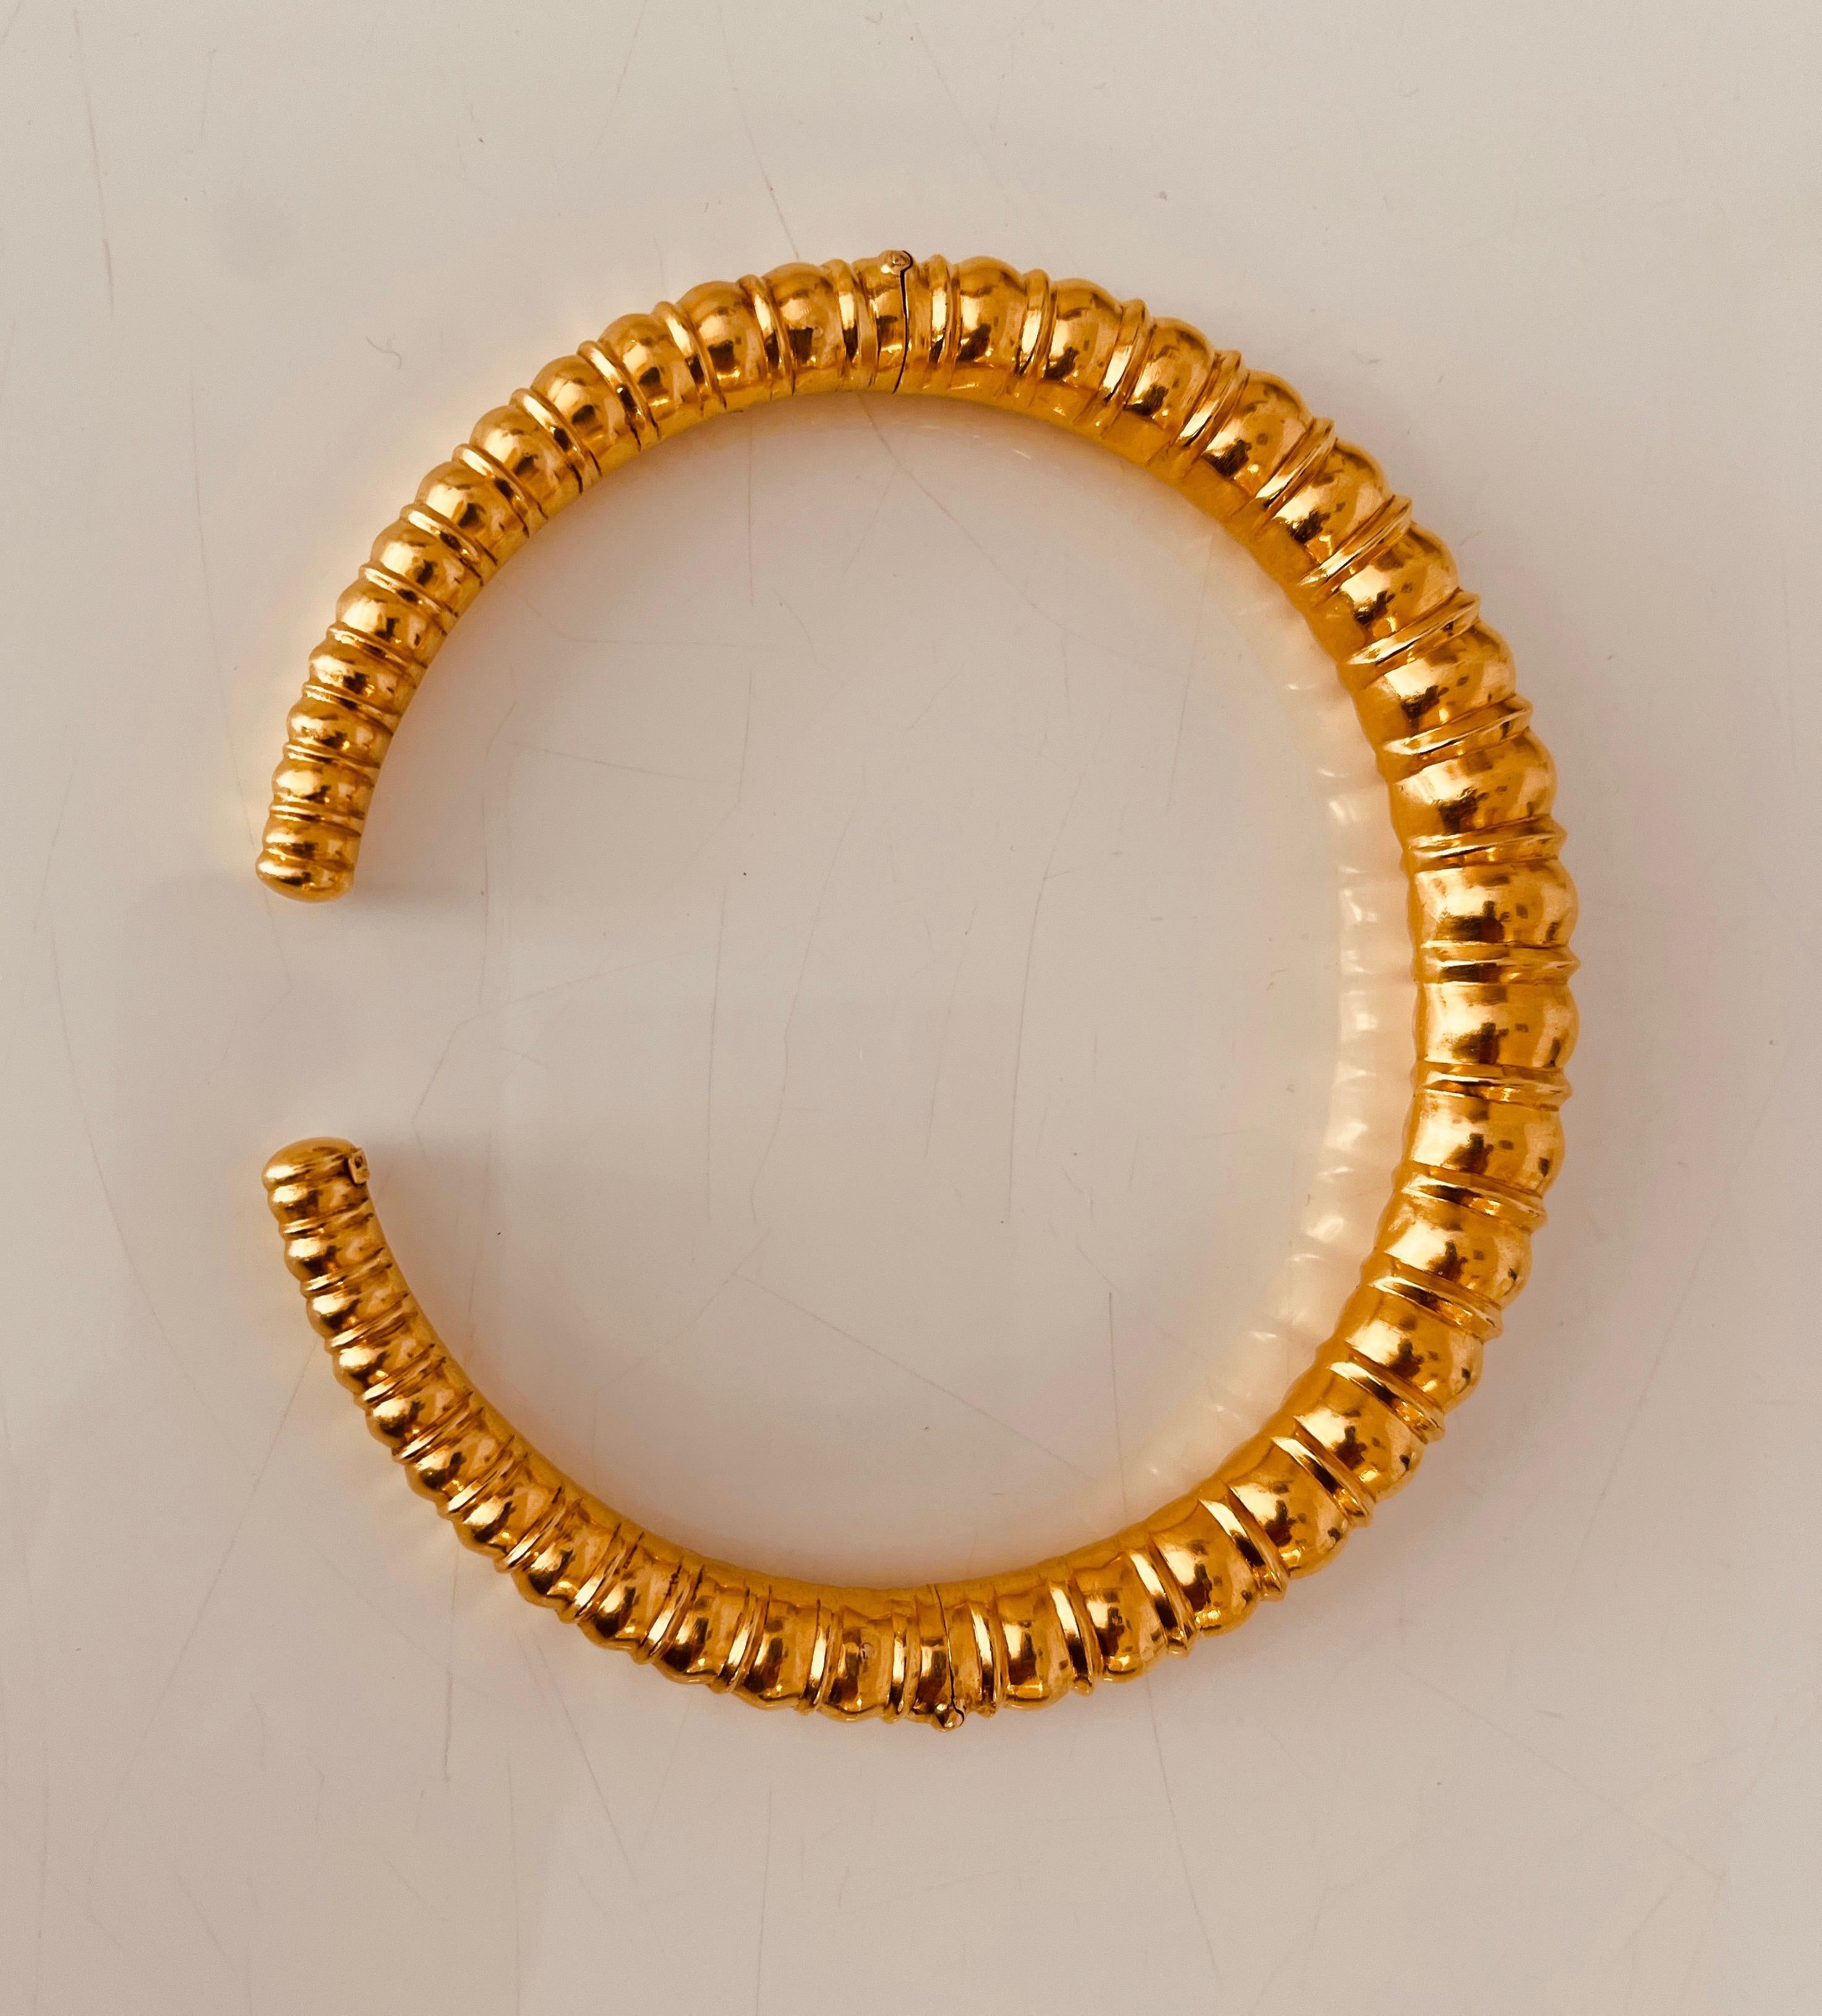 22 carat gold jewellery